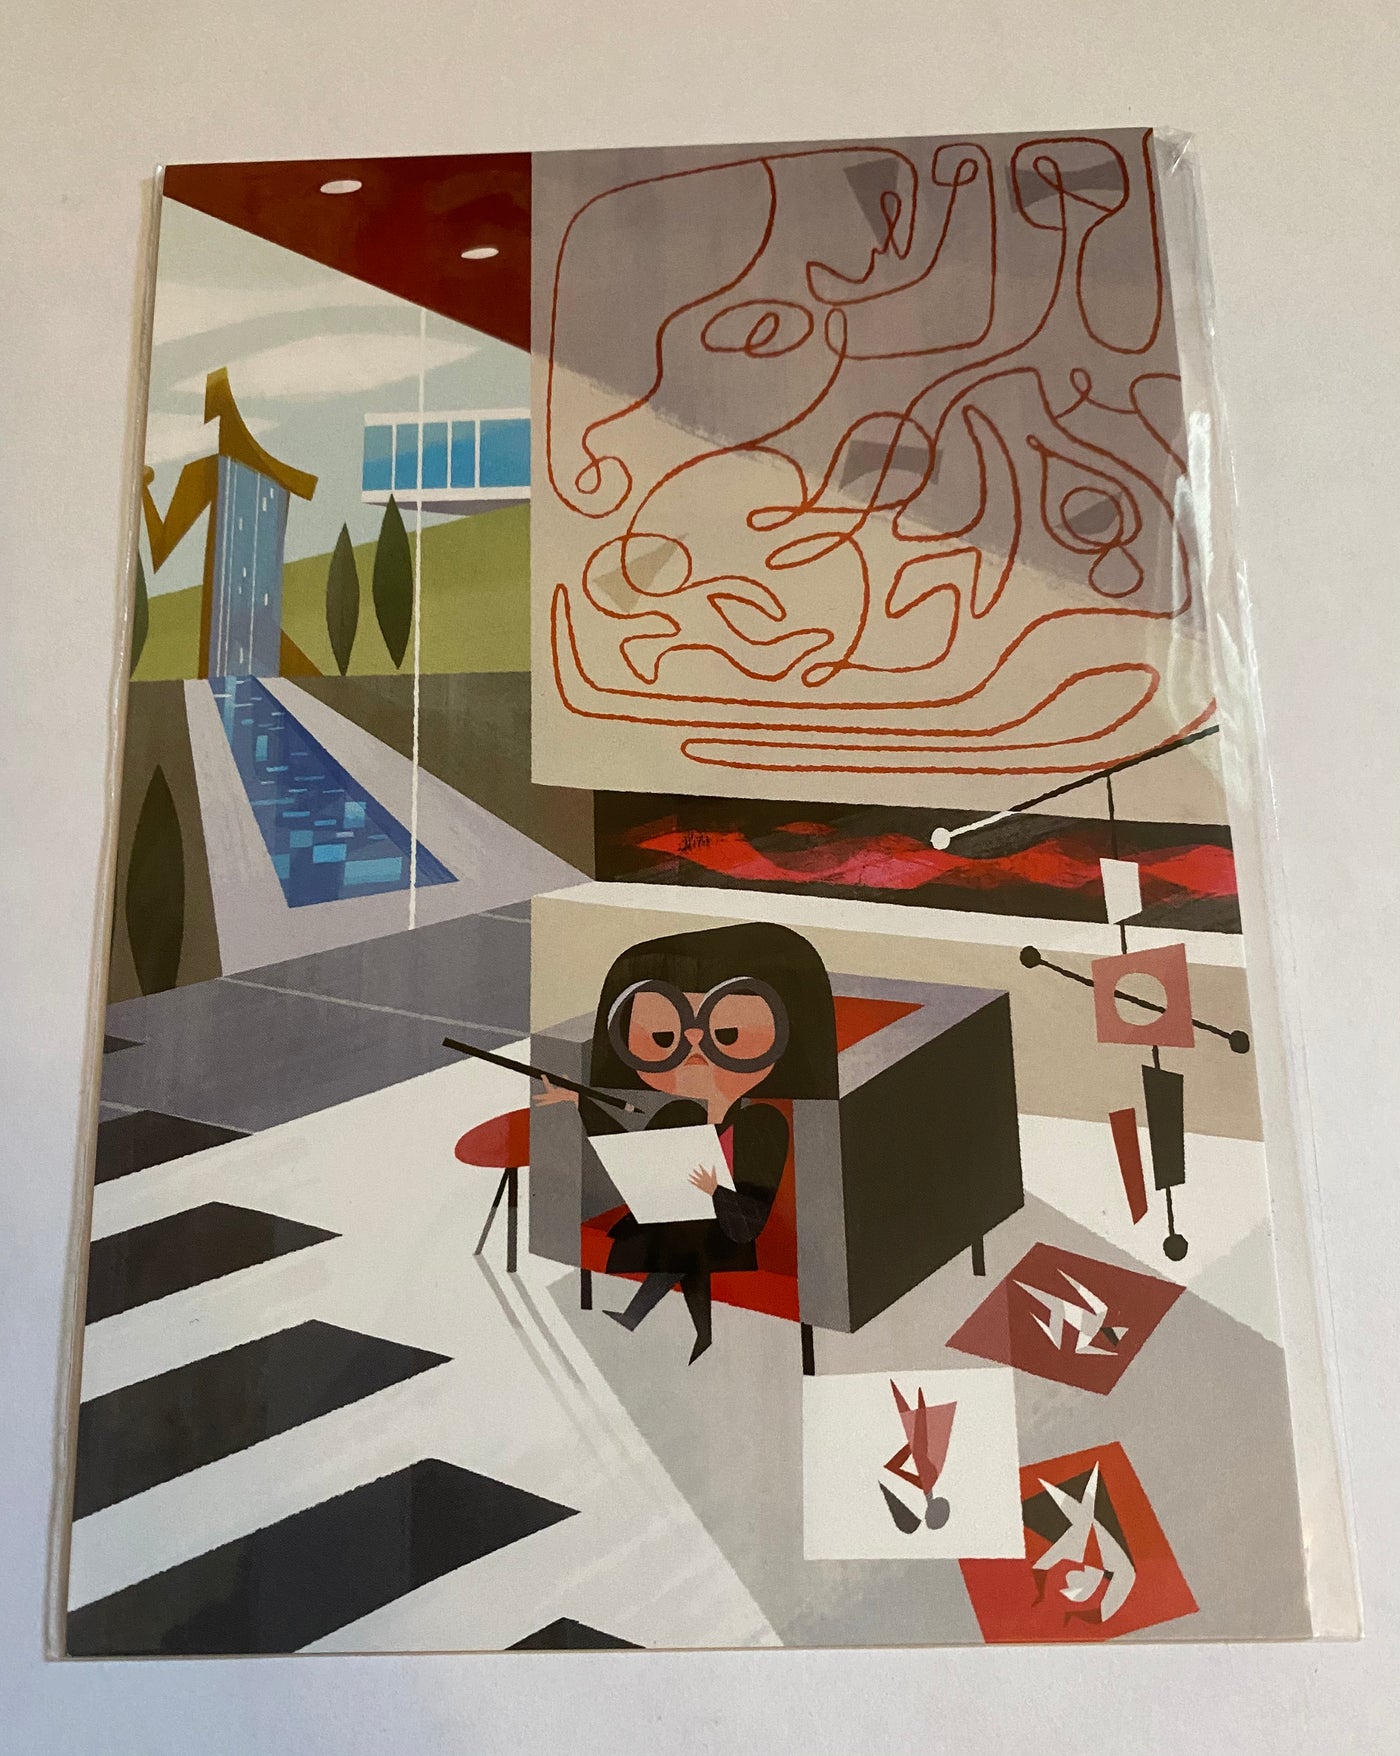 Disney Edna Mode by Joey Chou Postcard Wonderground Gallery New